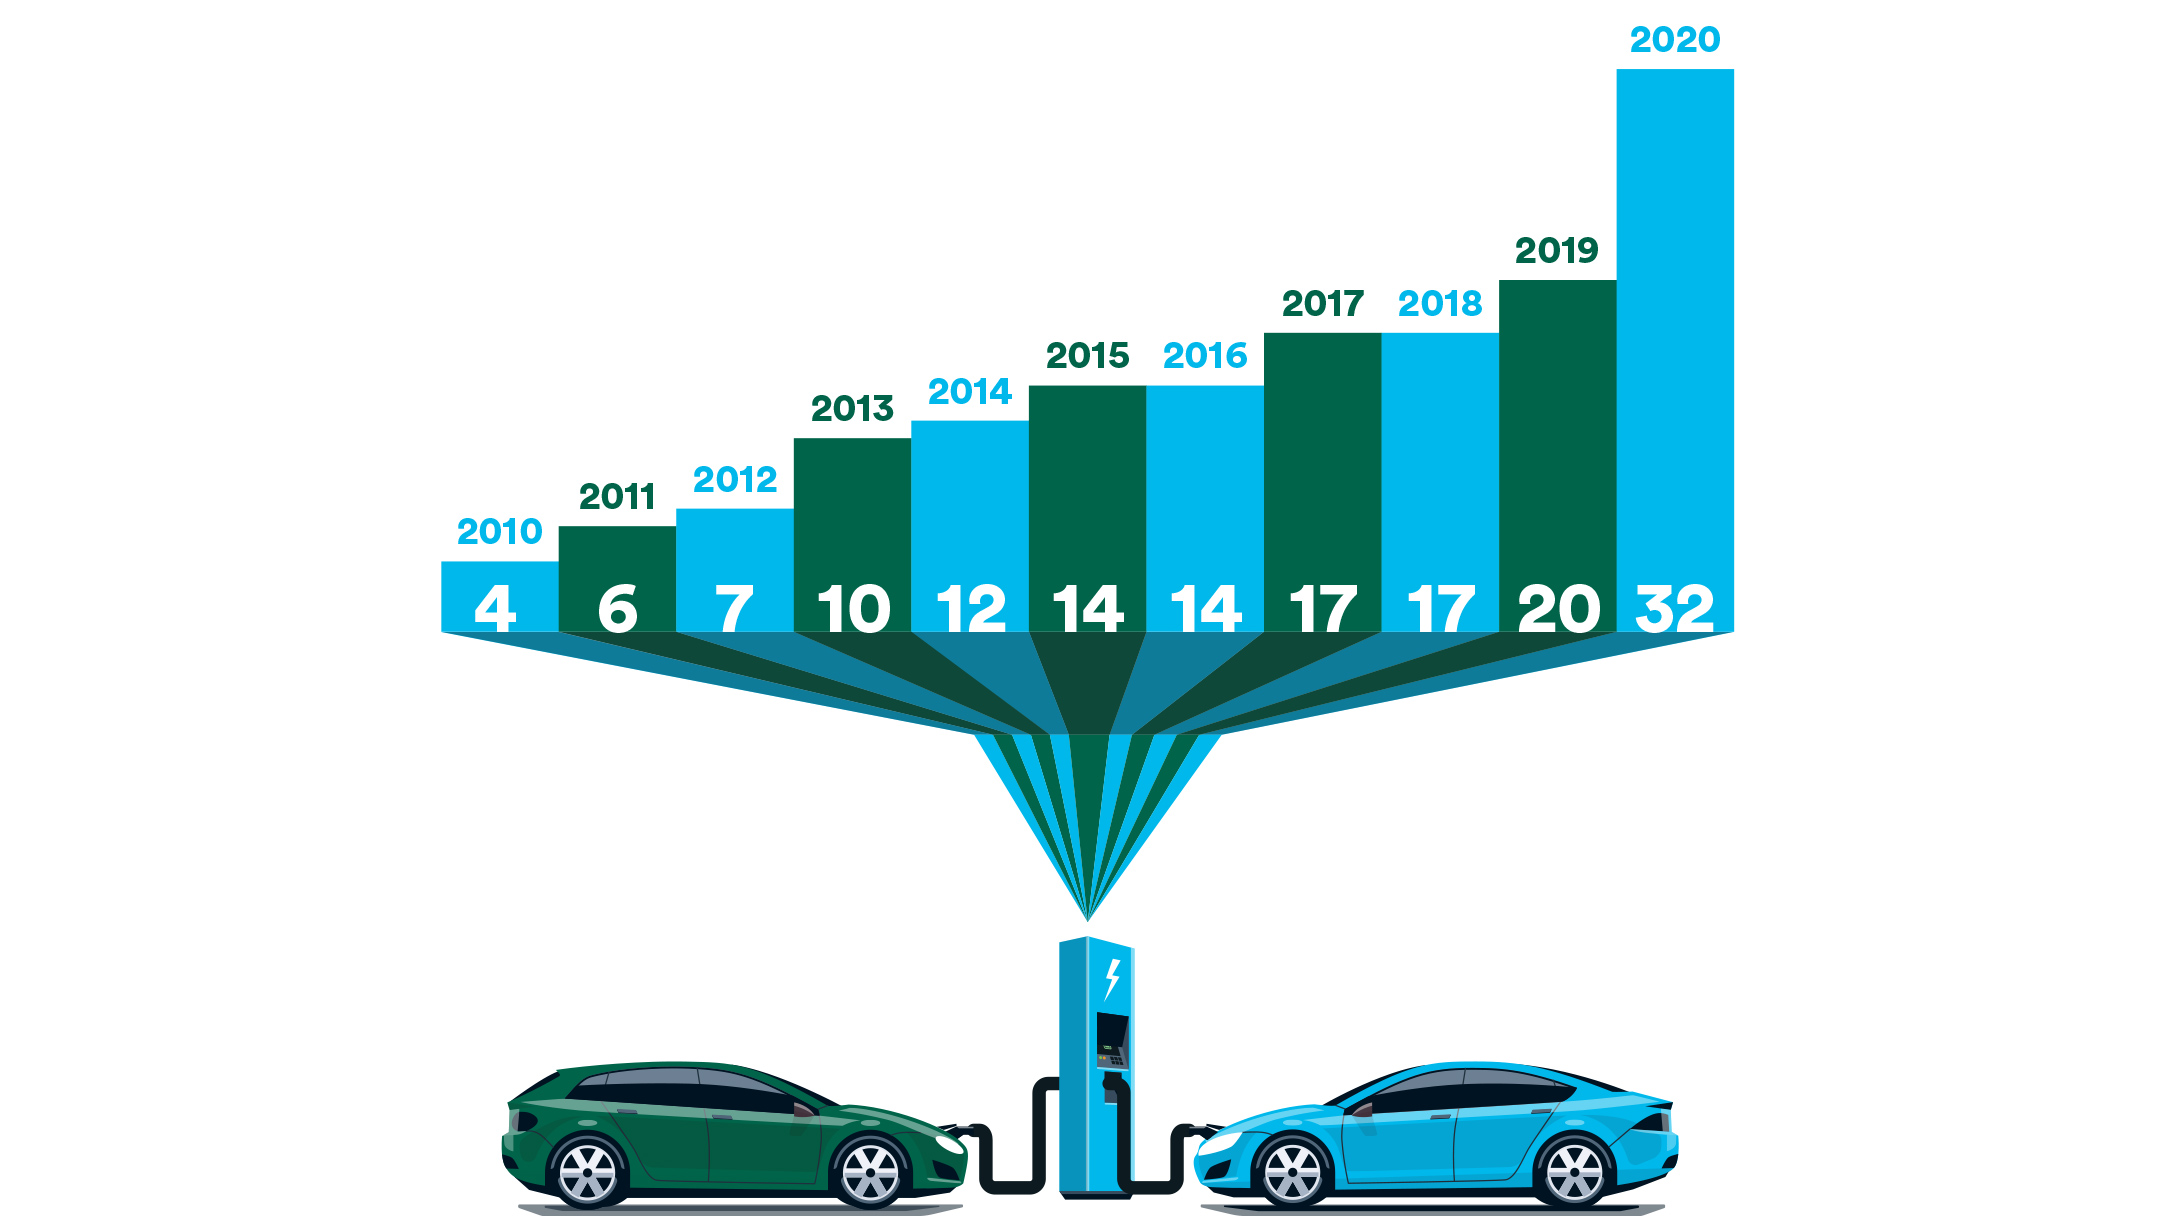 Grafik Modellvielfalt der E-Autos: 2010 vier Stüück, 2020 32 Stück auf dem Markt